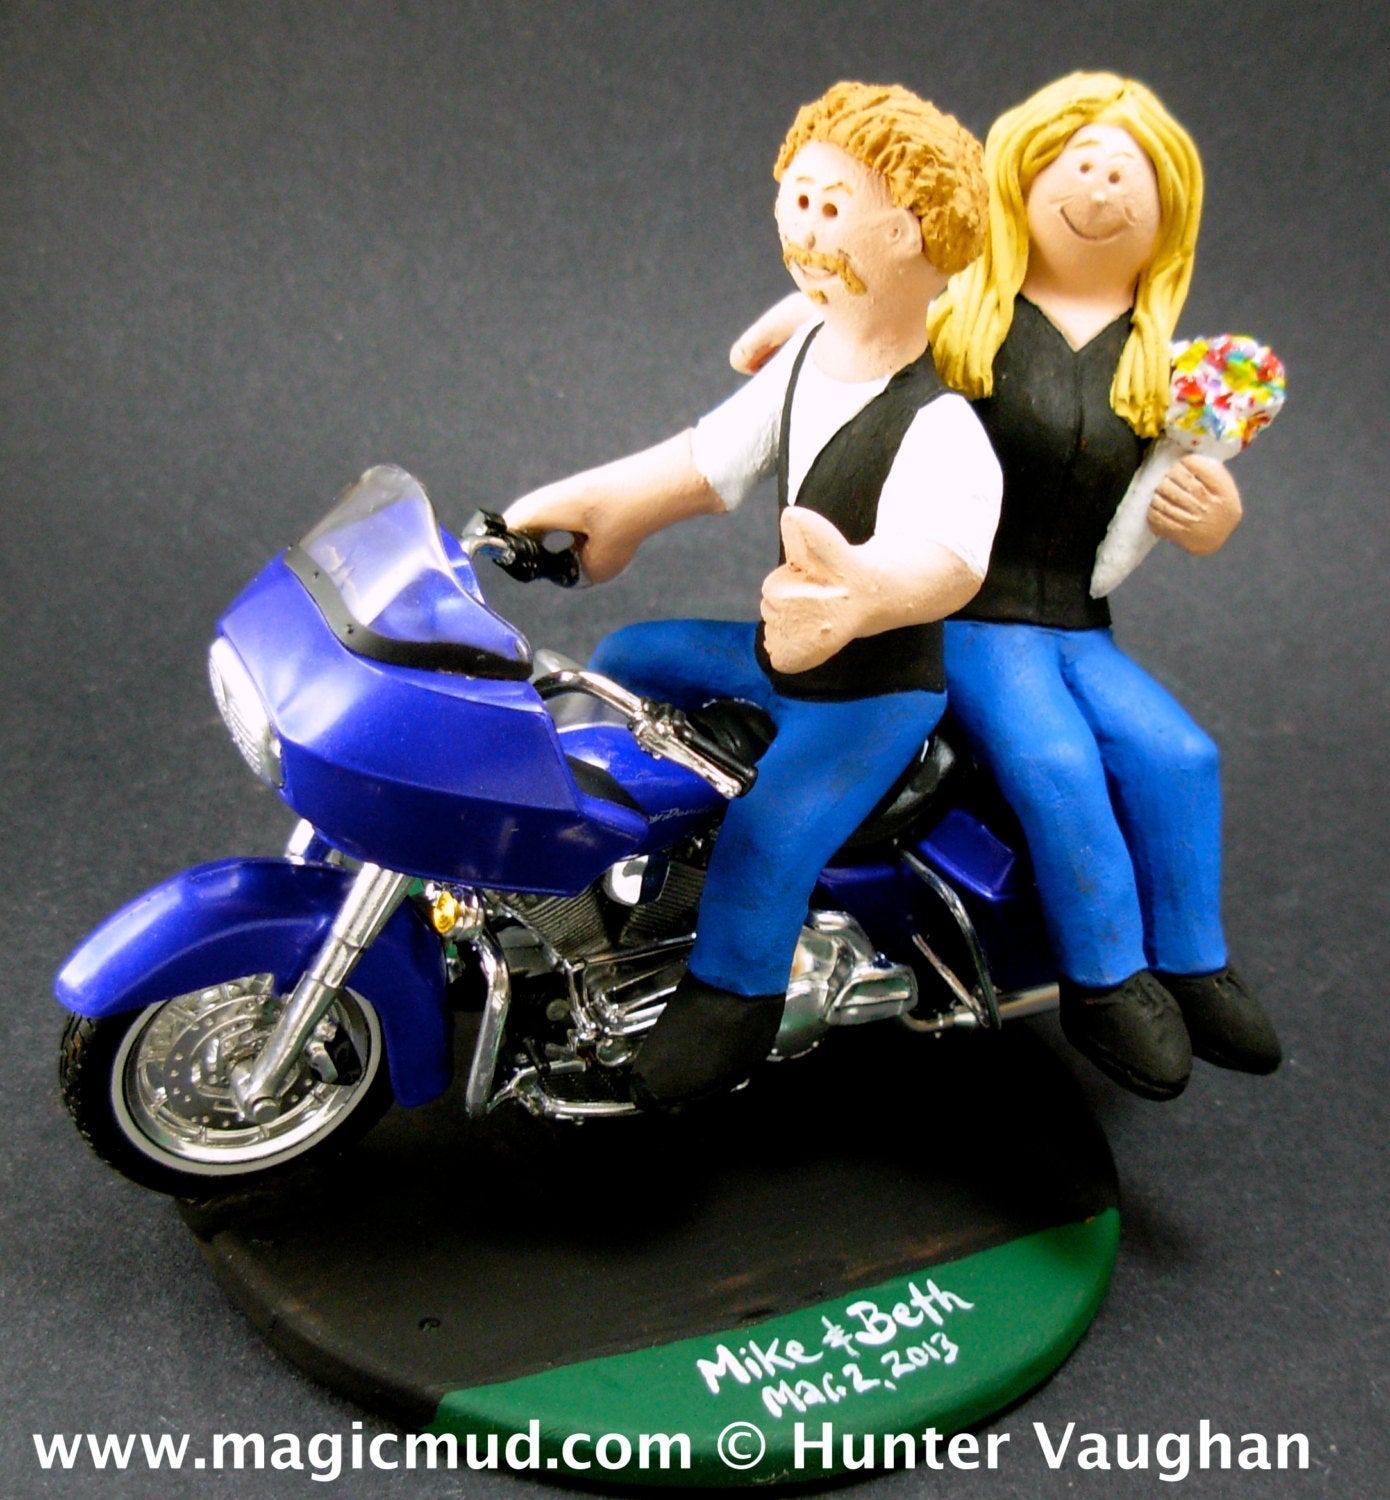 Goateed Groom on a Harley Wedding Cake Topper, Harley Wedding Anniversary Gift/Cake Topper, Motorcycle Bride and Groom Wedding Cake Topper. - iWeddingCakeToppers